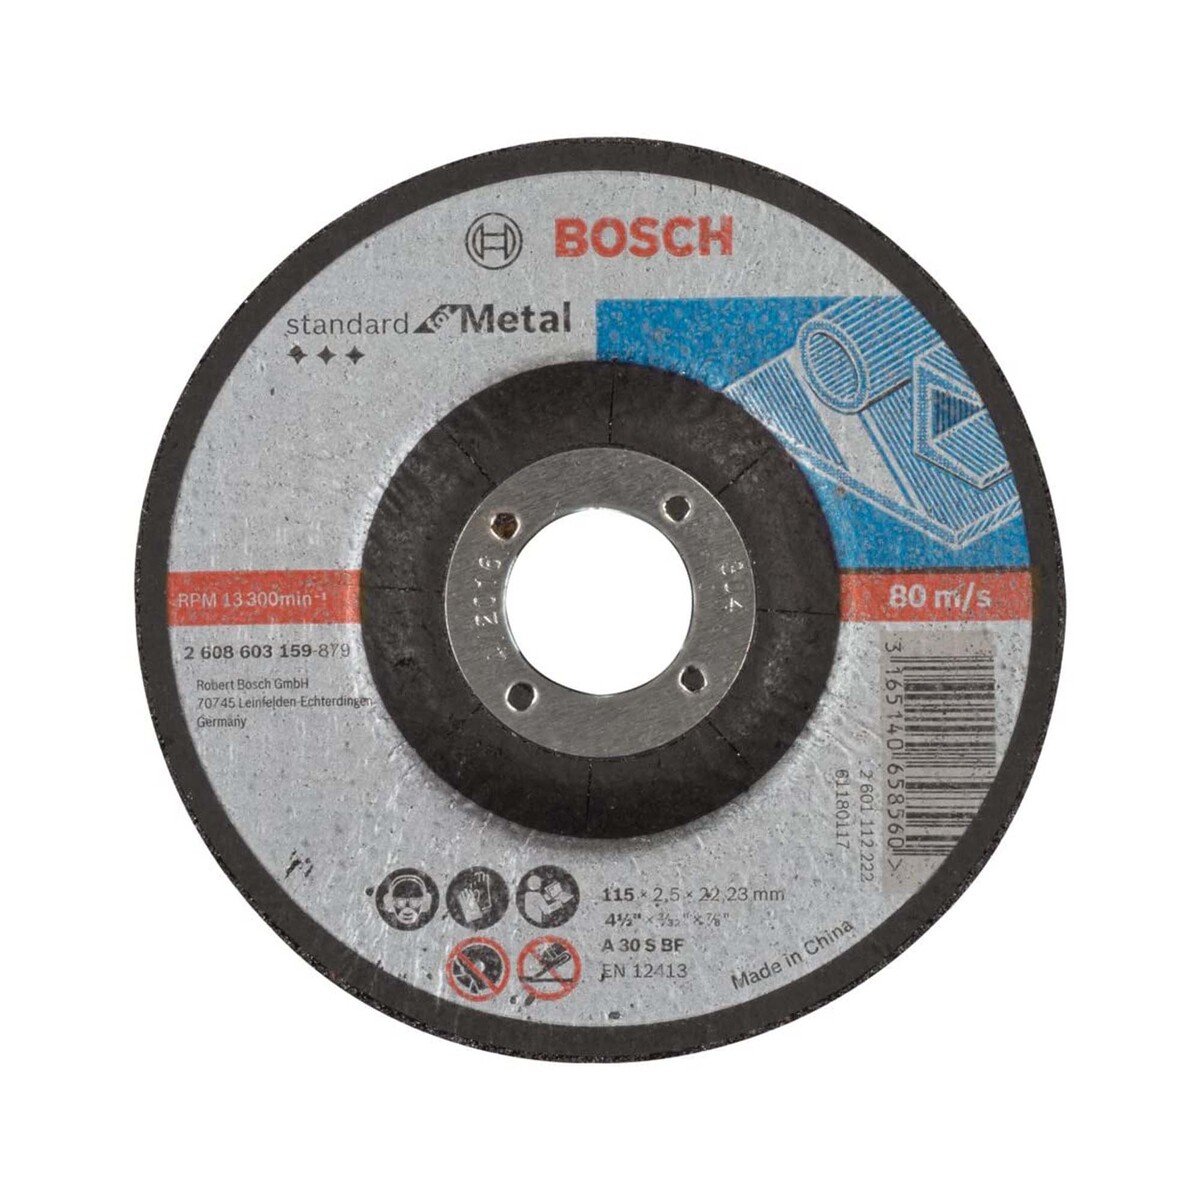 Bosch Professional Angle Grinder 670W 06013756L1 + Cutting Disc 10pcs